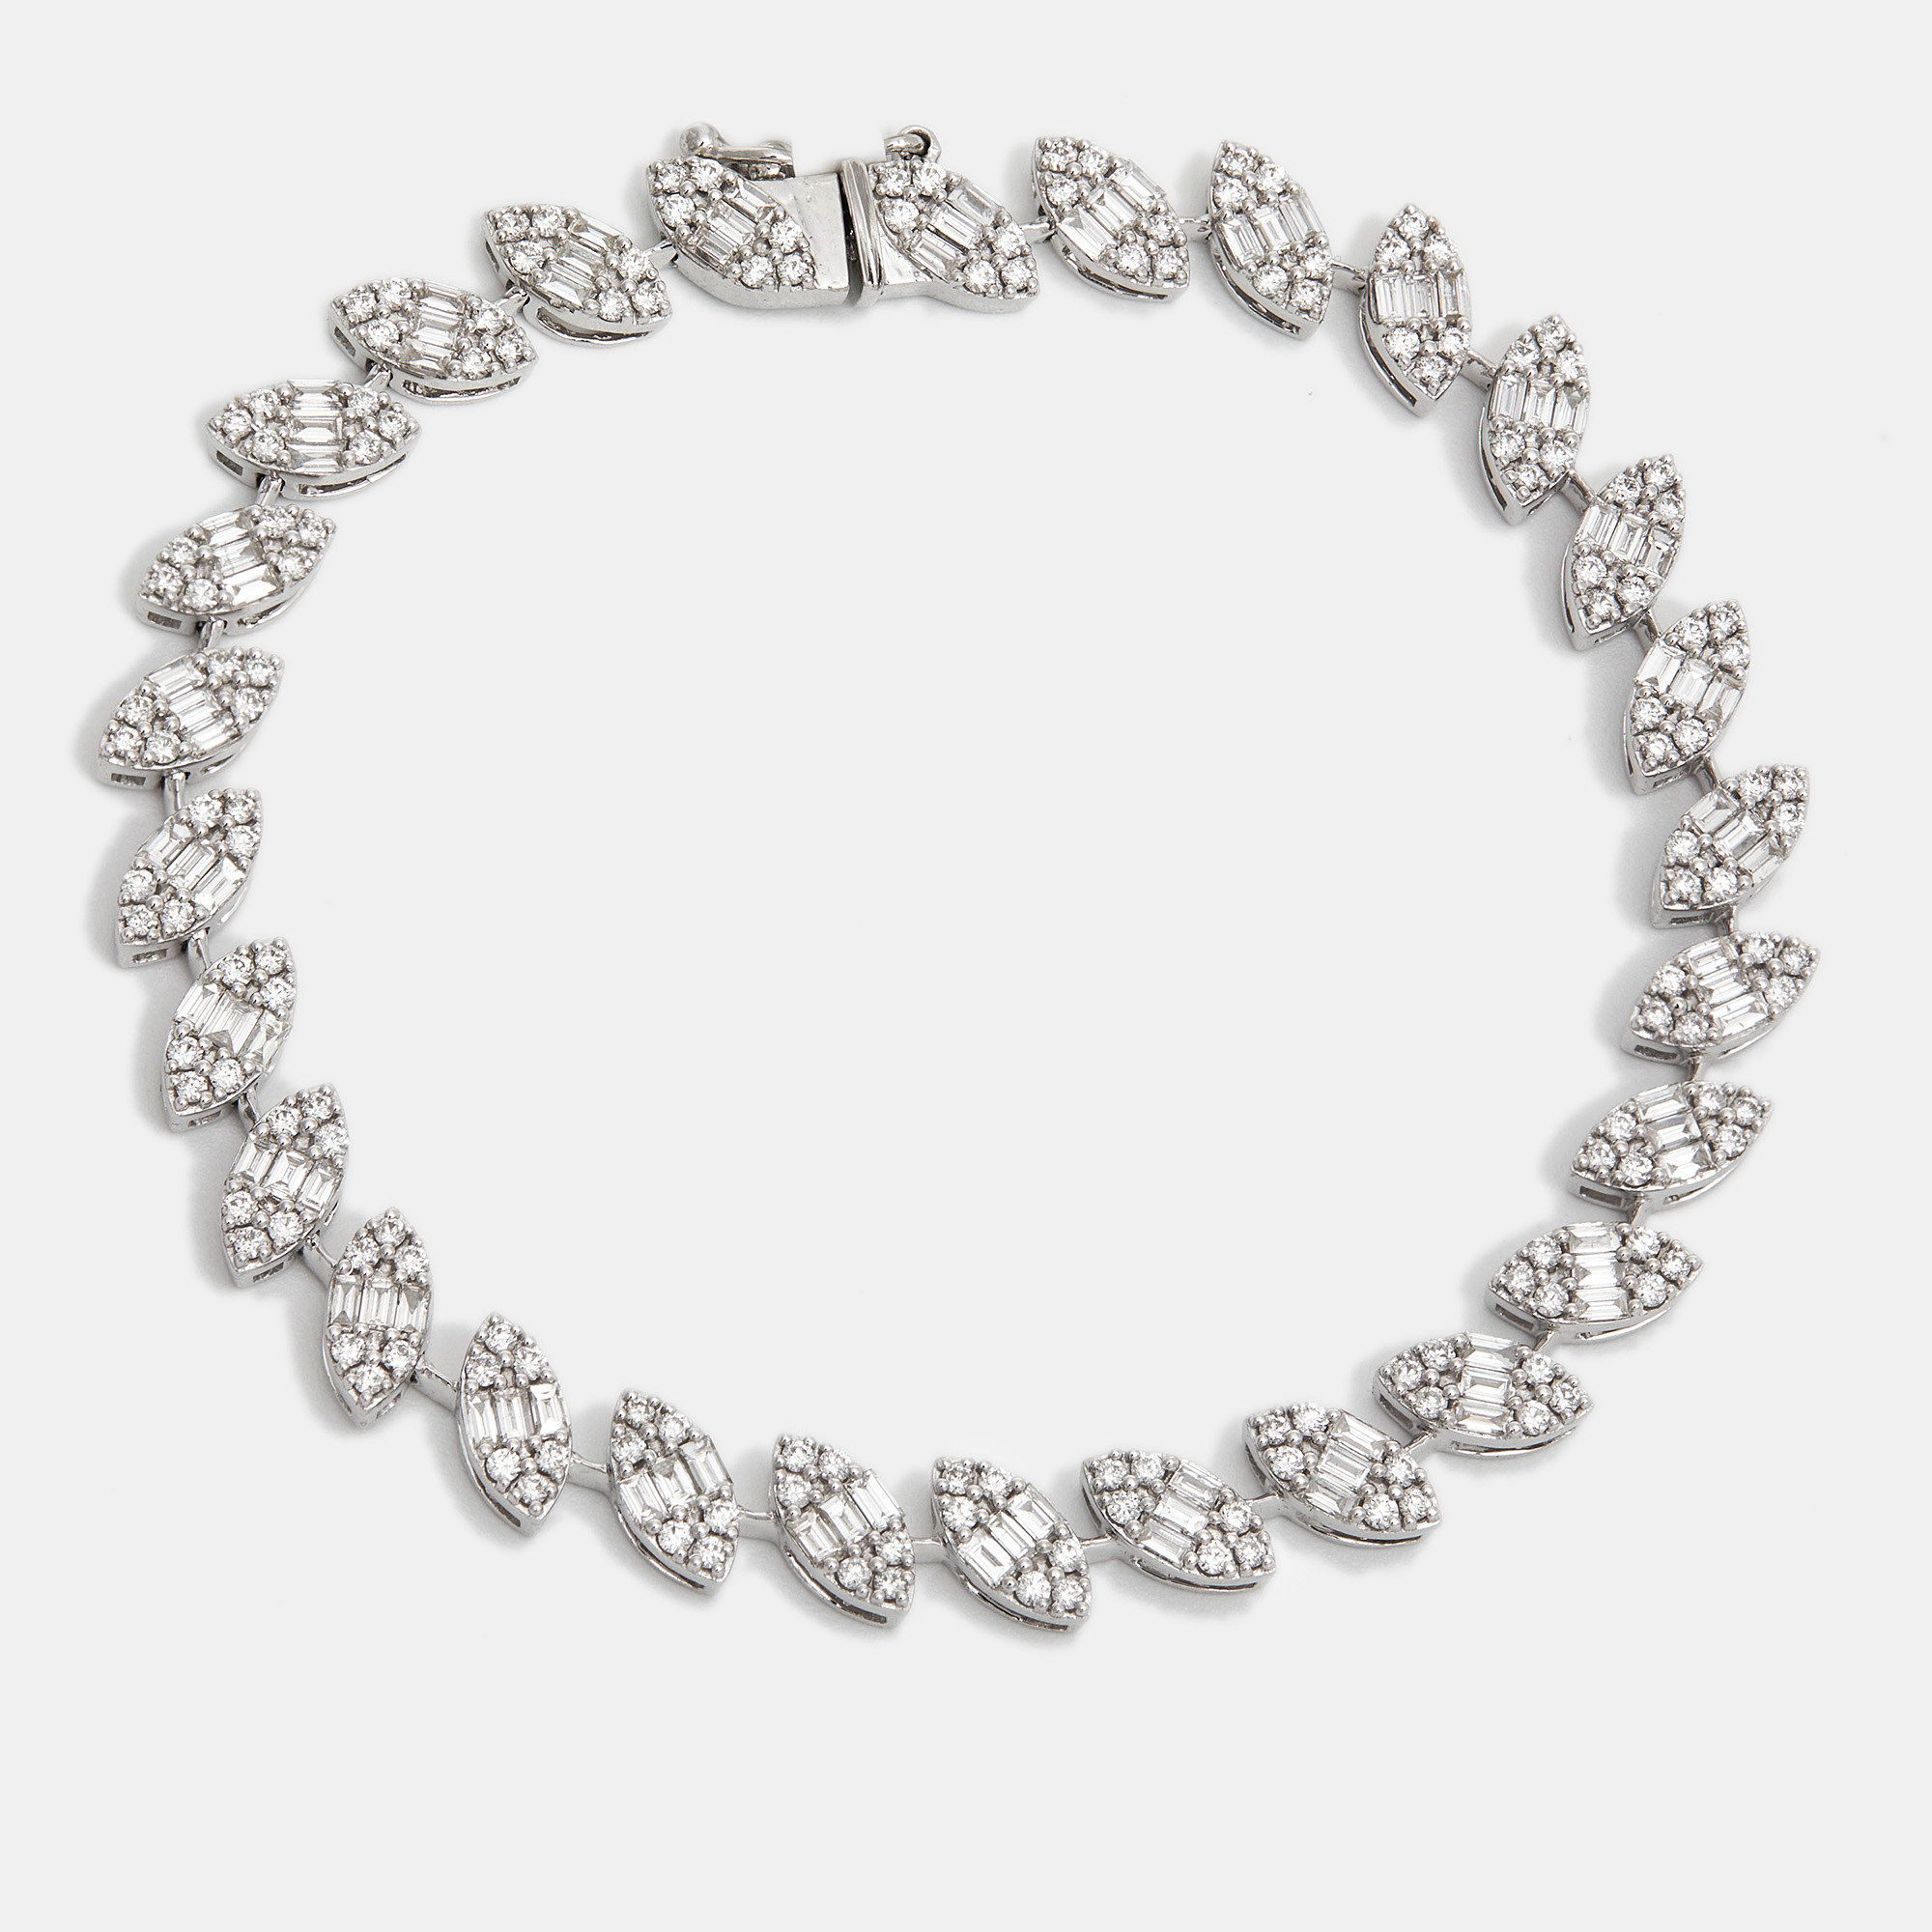 The diamond edit elegant baguette and round diamonds 2.64 cts 18k white gold bracelet